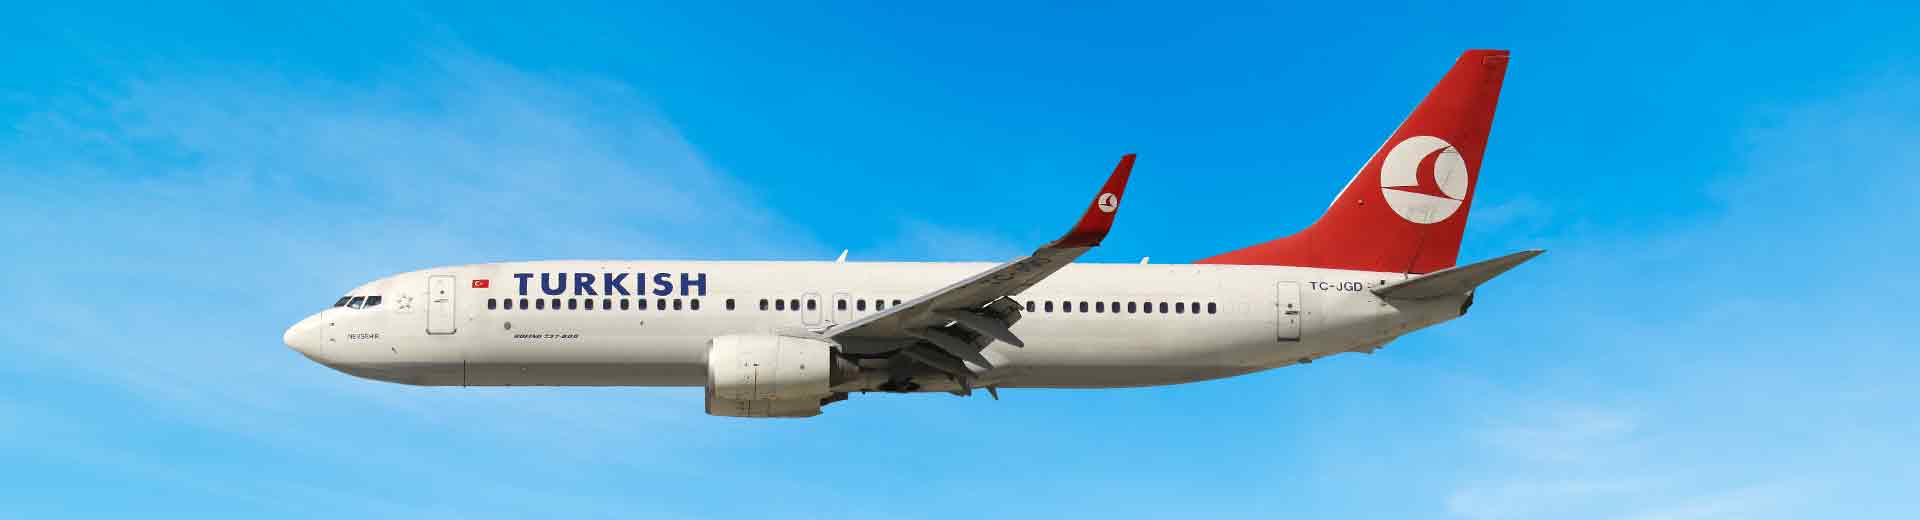 Airline Turkish Airlines-hero